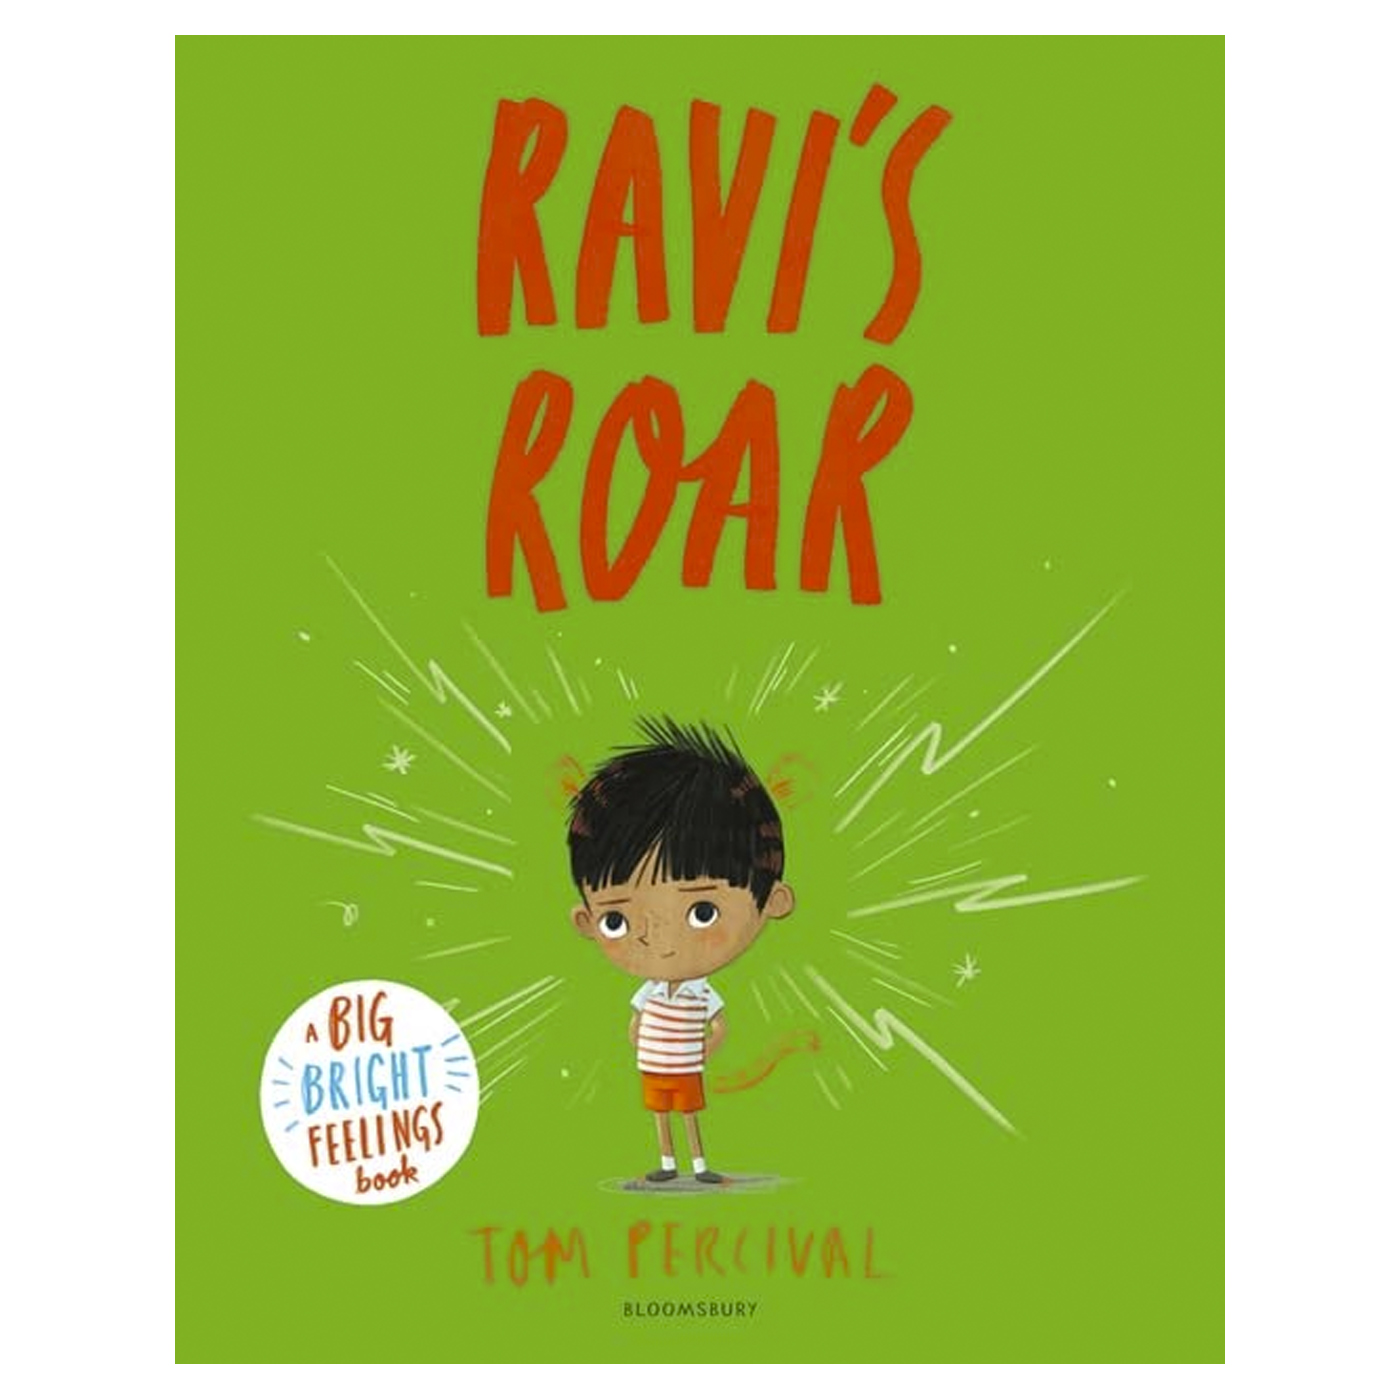  Ravi's Roar: A Big Bright Feelings Book